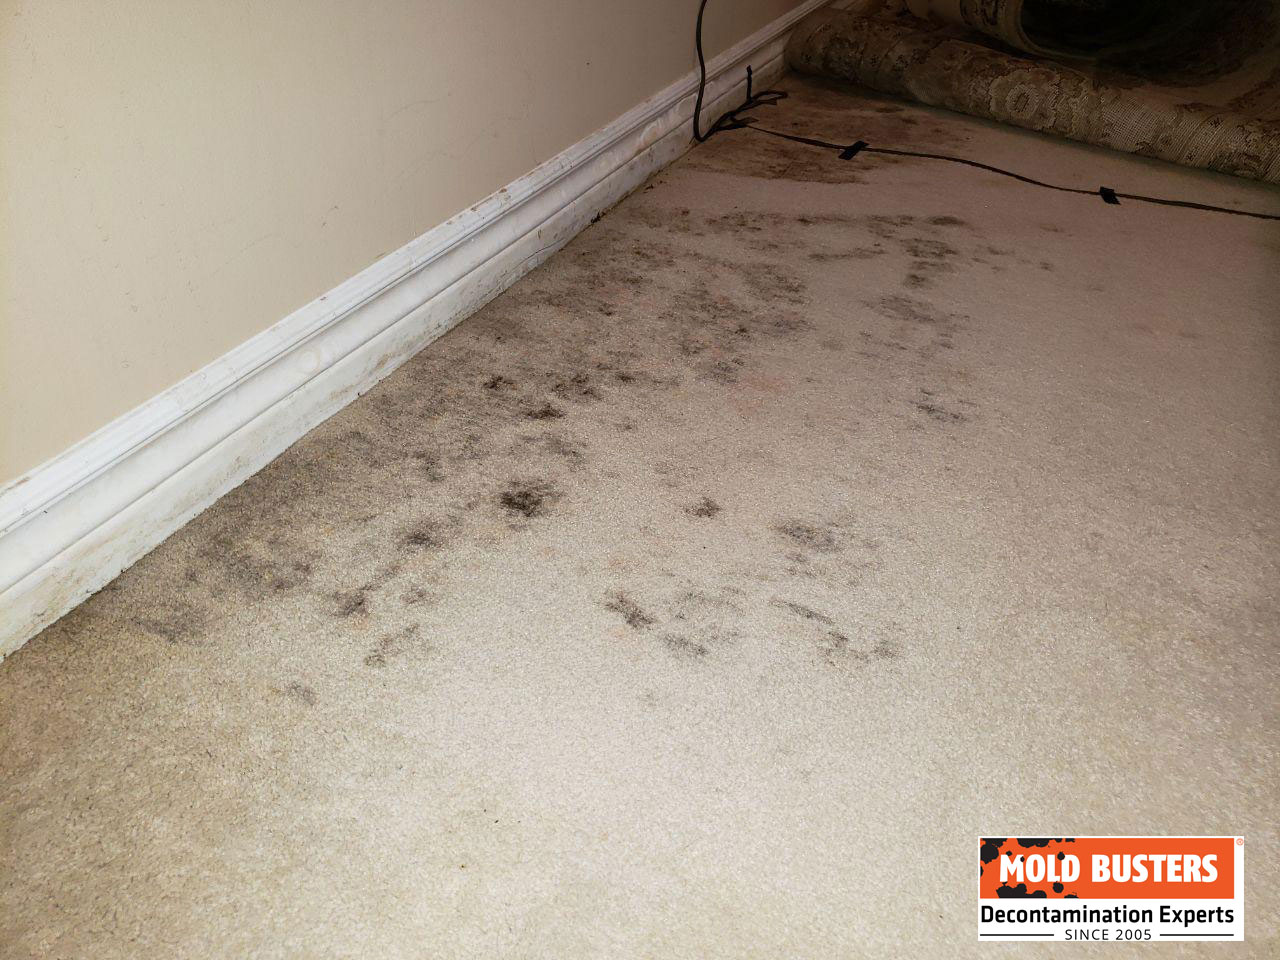 Prevent carpet mold after water damage